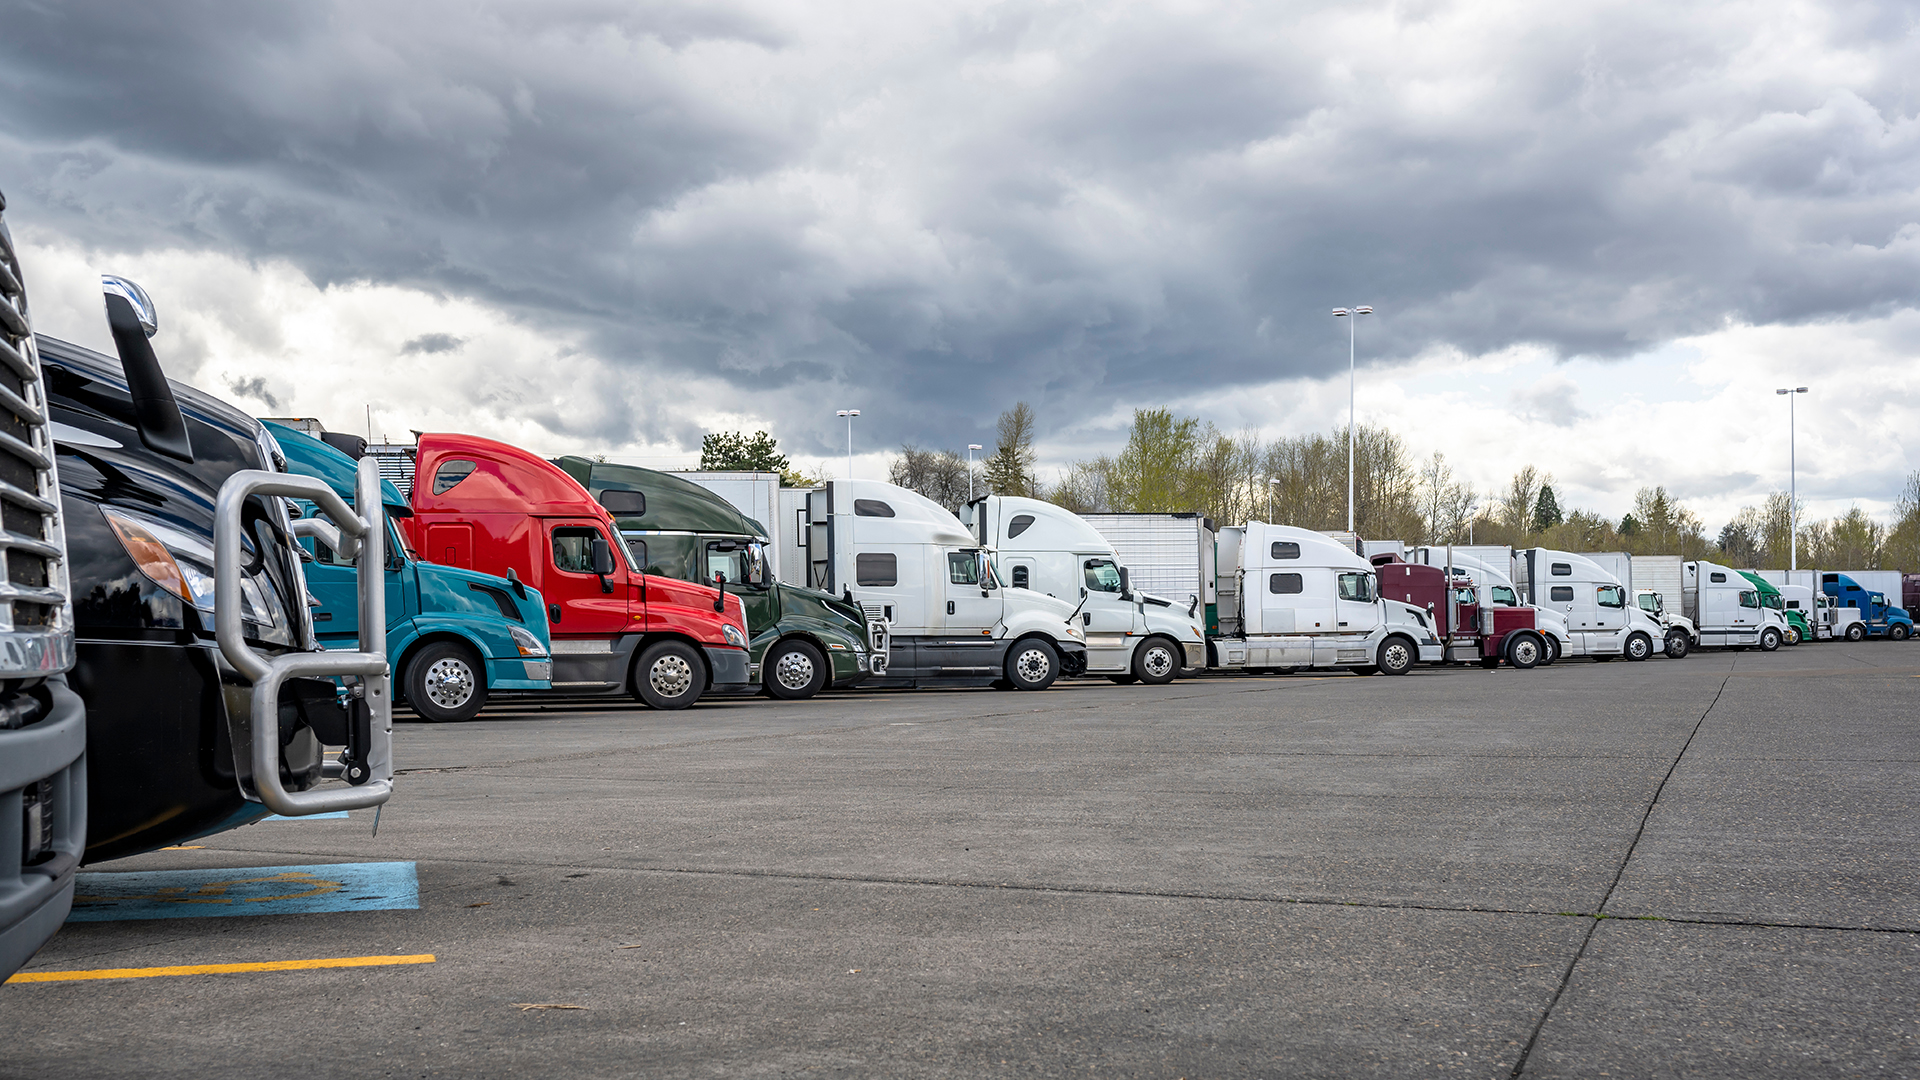 Fourteen semi trucks lined up in a parking lot